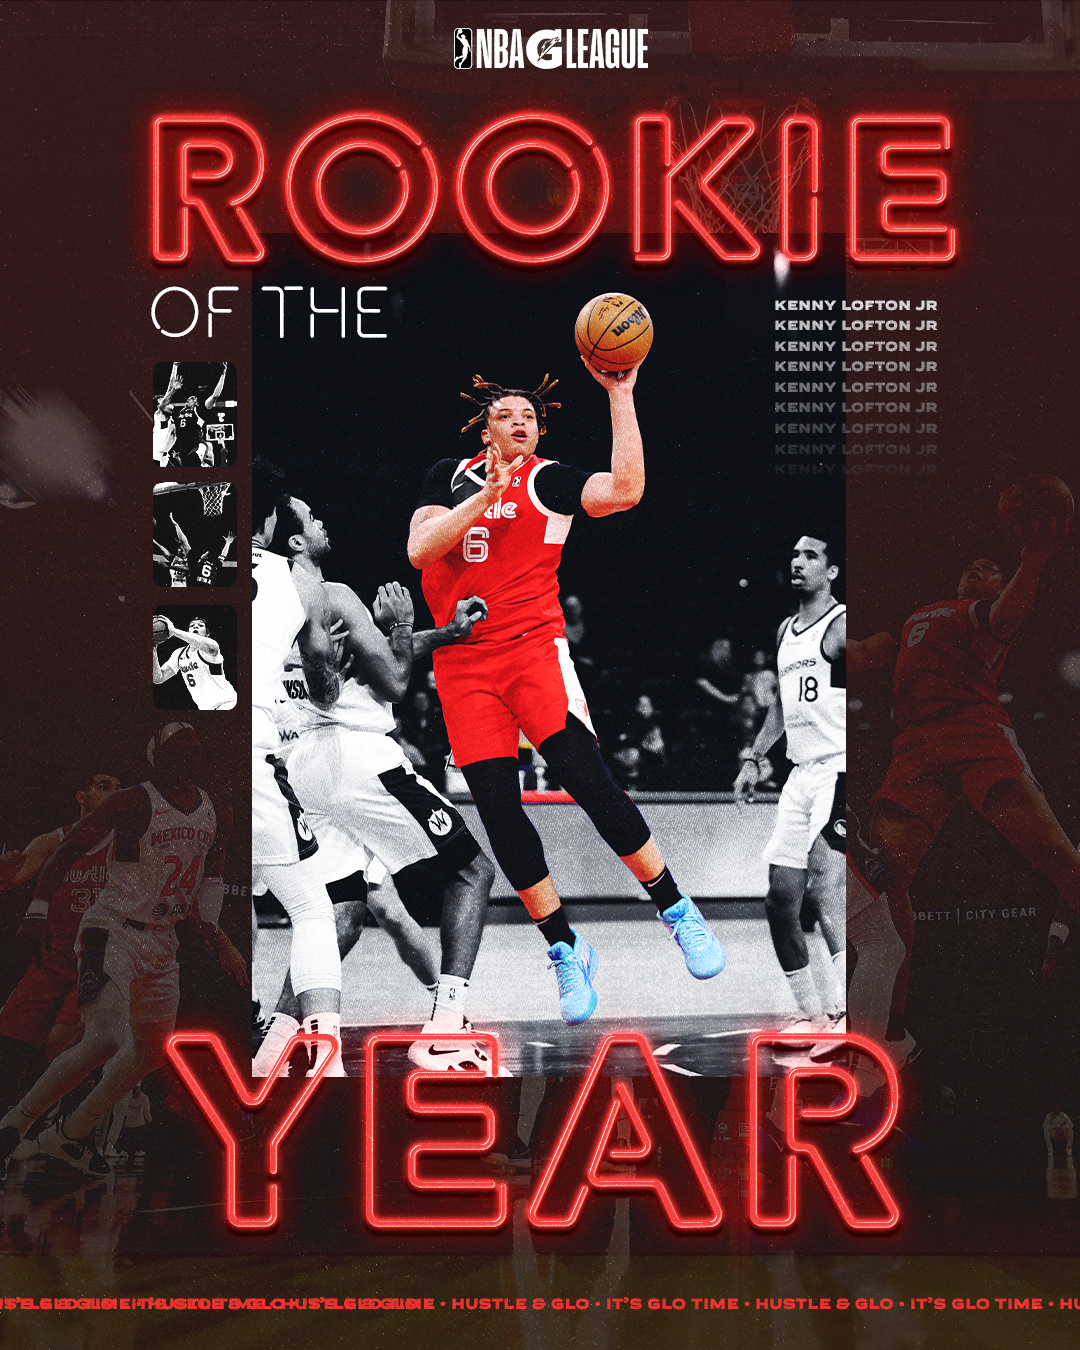 Grizzlies forward Kenneth Lofton Jr. named G League Rookie of the Year